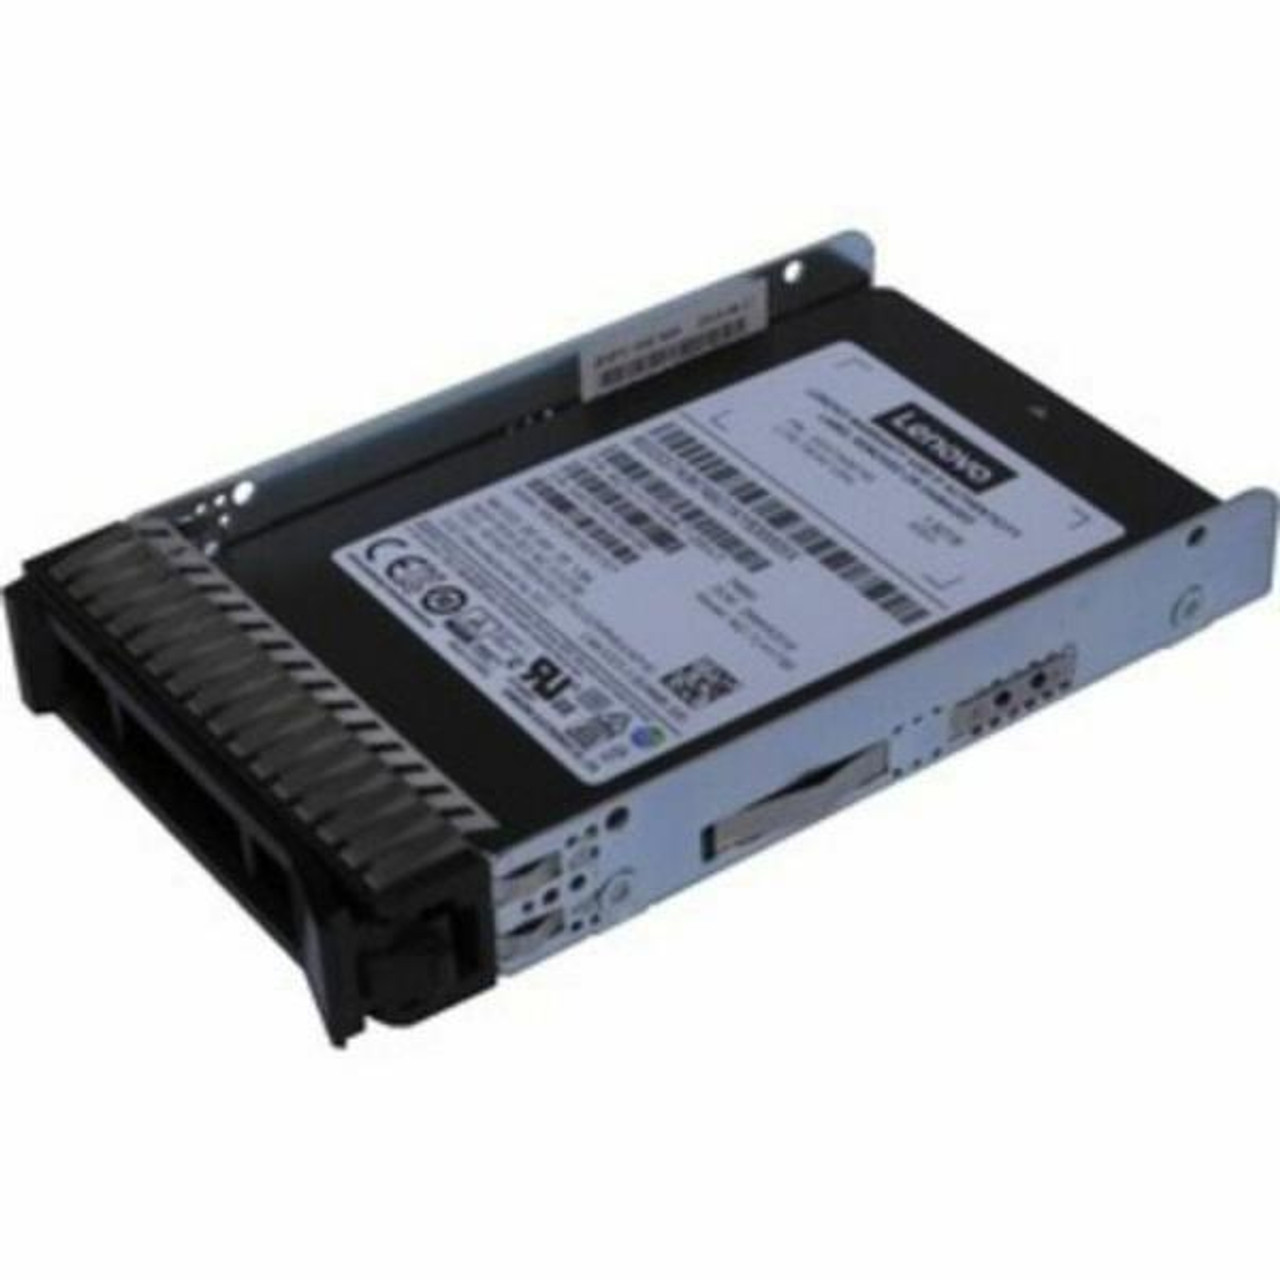 Lenovo 5300 480GB 3.5-Inch Internal Solid State Drive (SSD) 